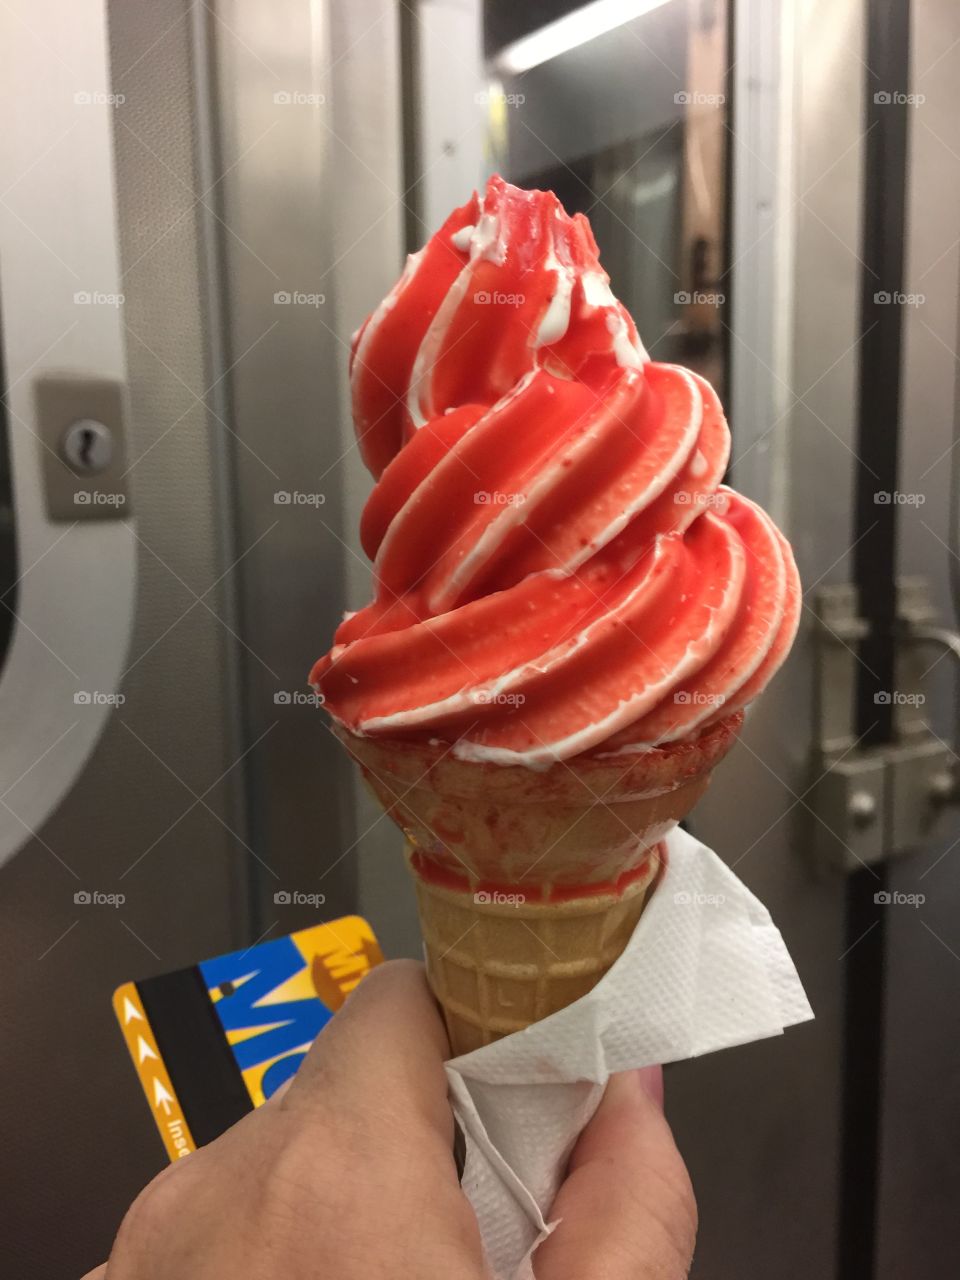 NYC Ice Cream N' MetroCard. Me showing my NYC ice cream cone and MetroCard